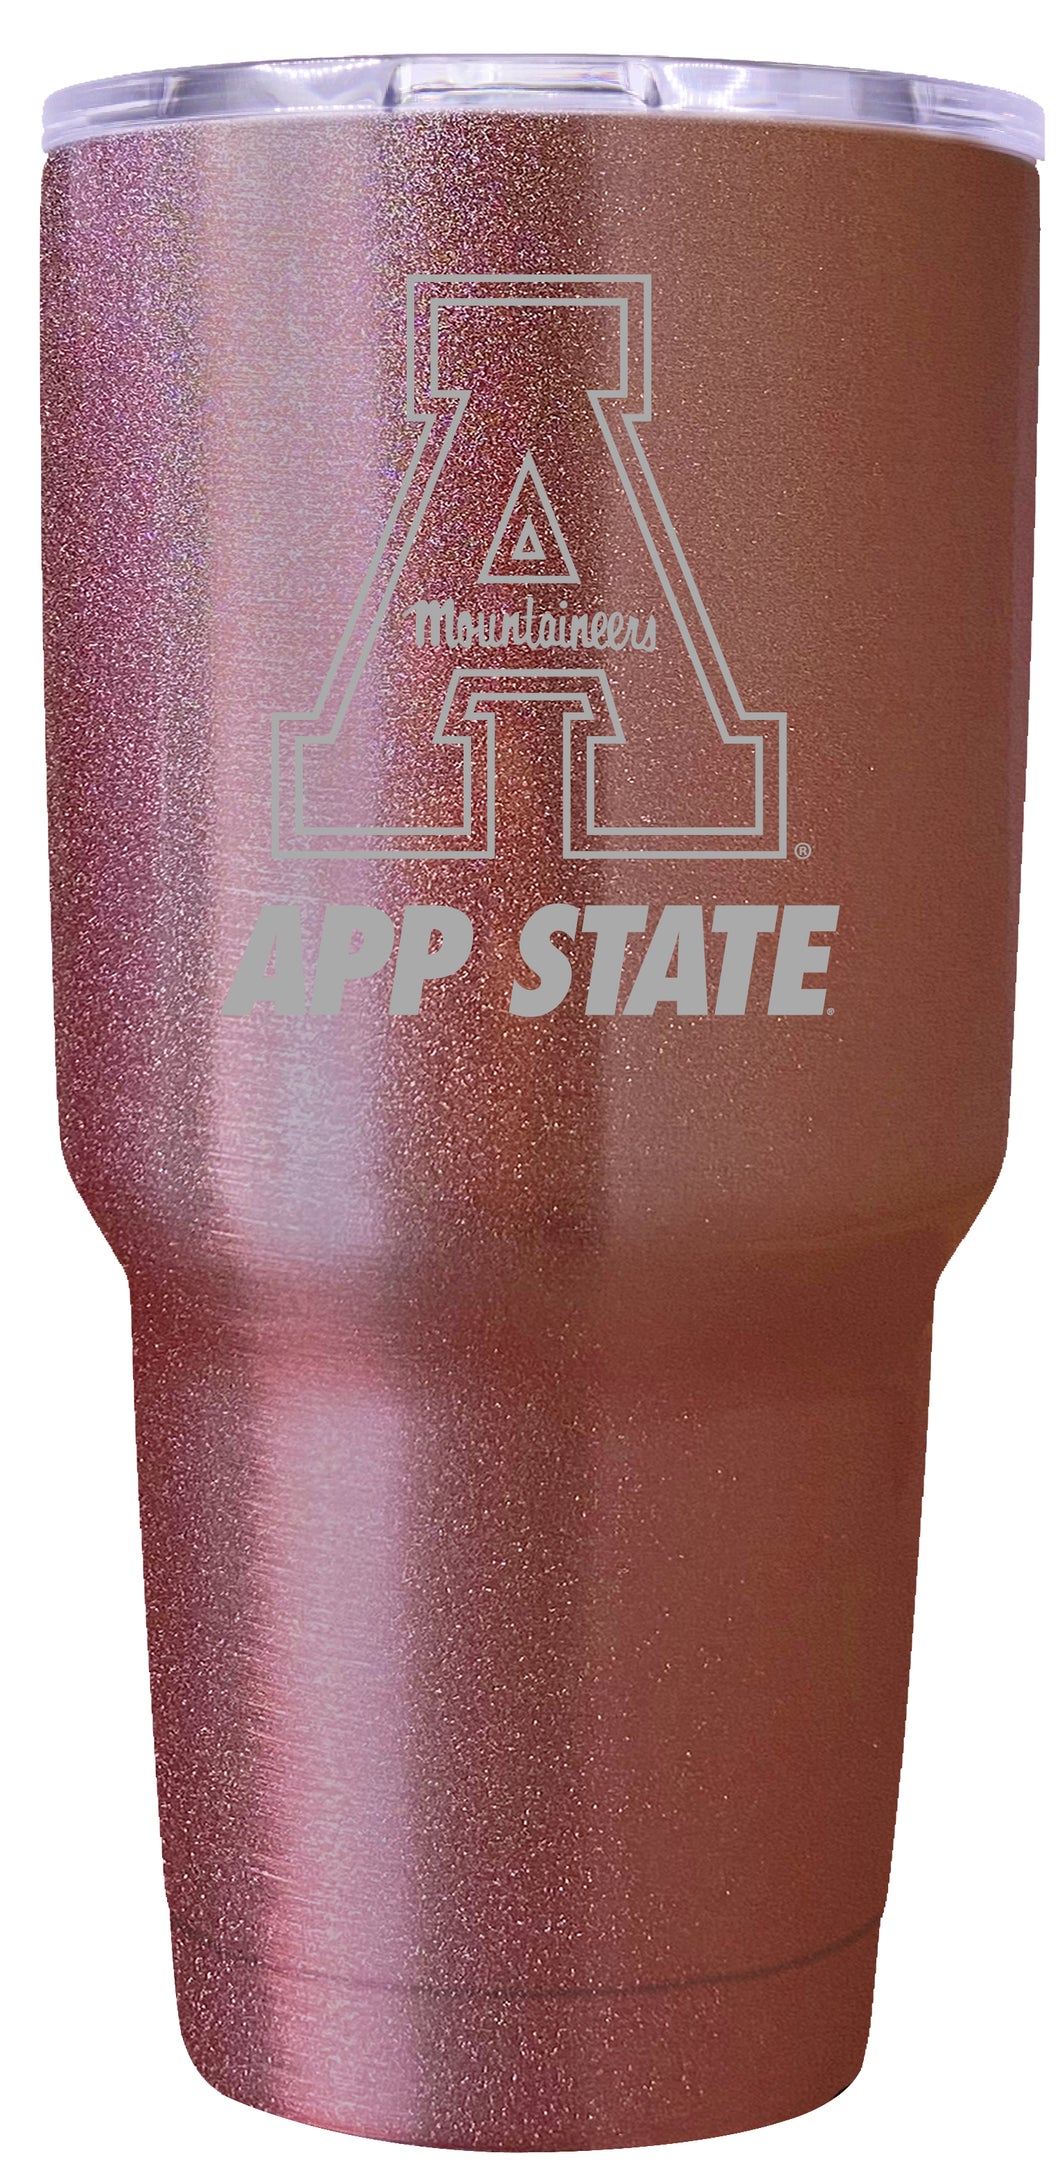 Appalachian State Premium Laser Engraved Tumbler - 24oz Stainless Steel Insulated Mug Rose Gold